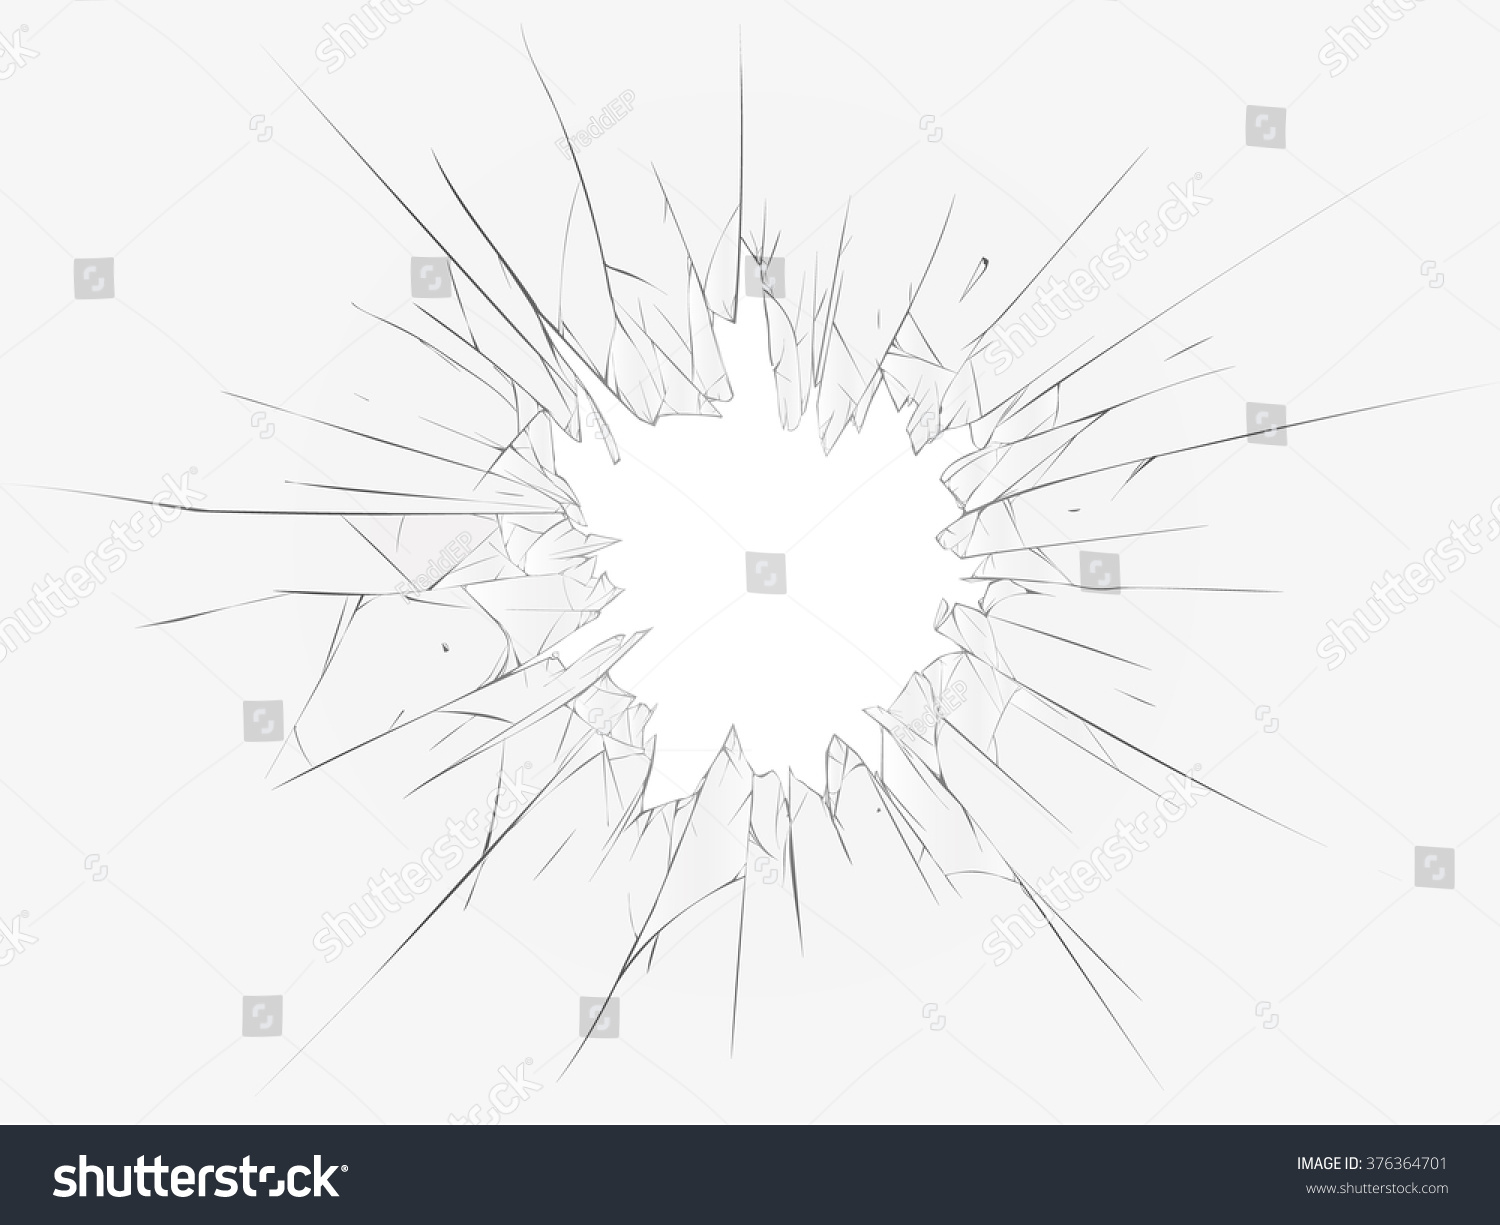 SVG of Broken glass on a white background. Vector illustration svg